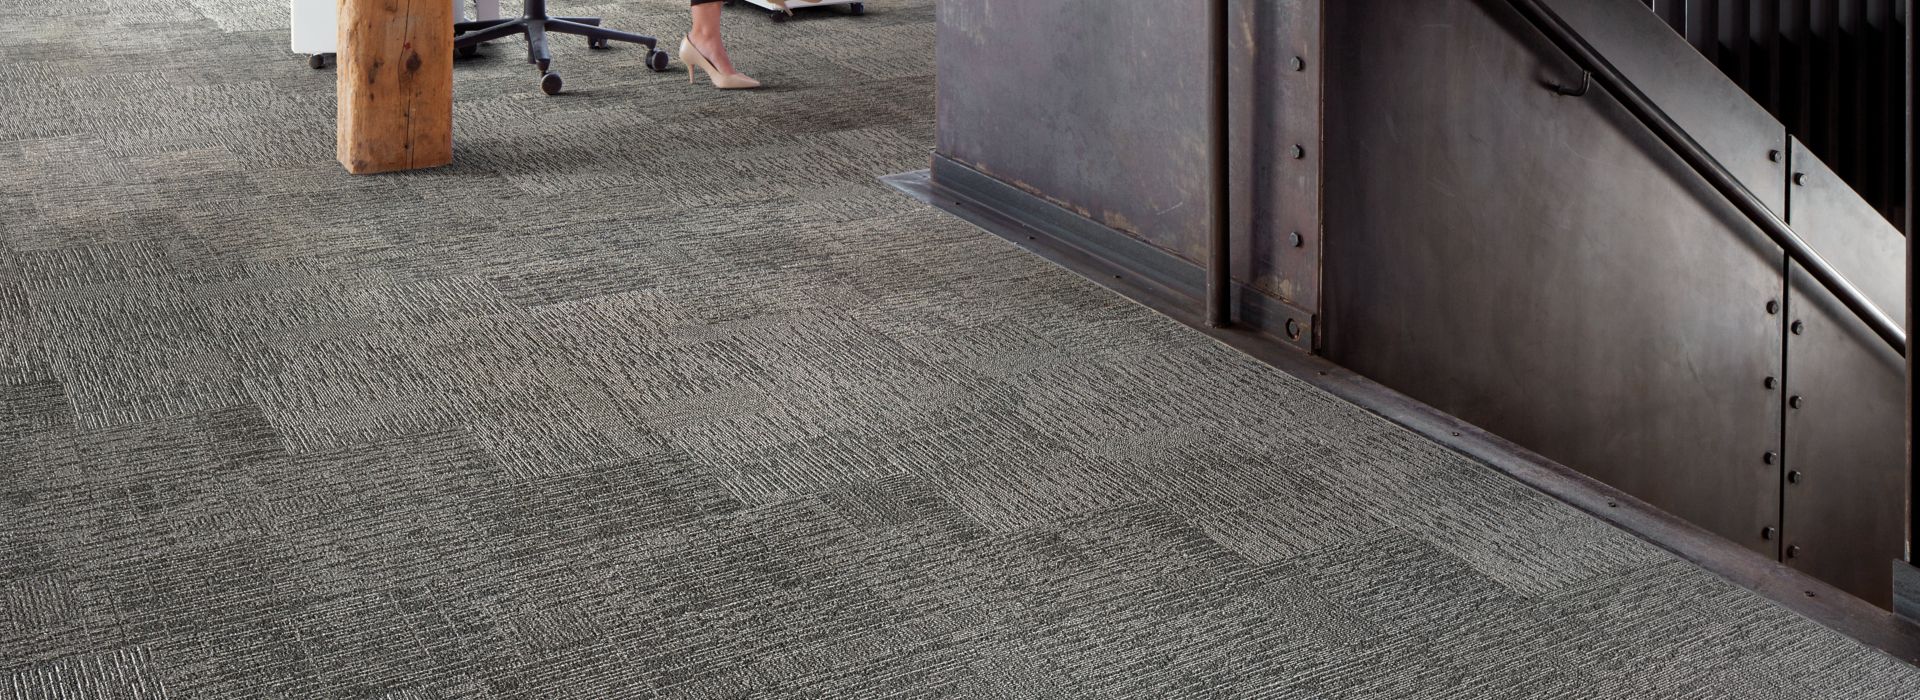 Interface Zen Stitch plank carpet tile in open office setting Bildnummer 1